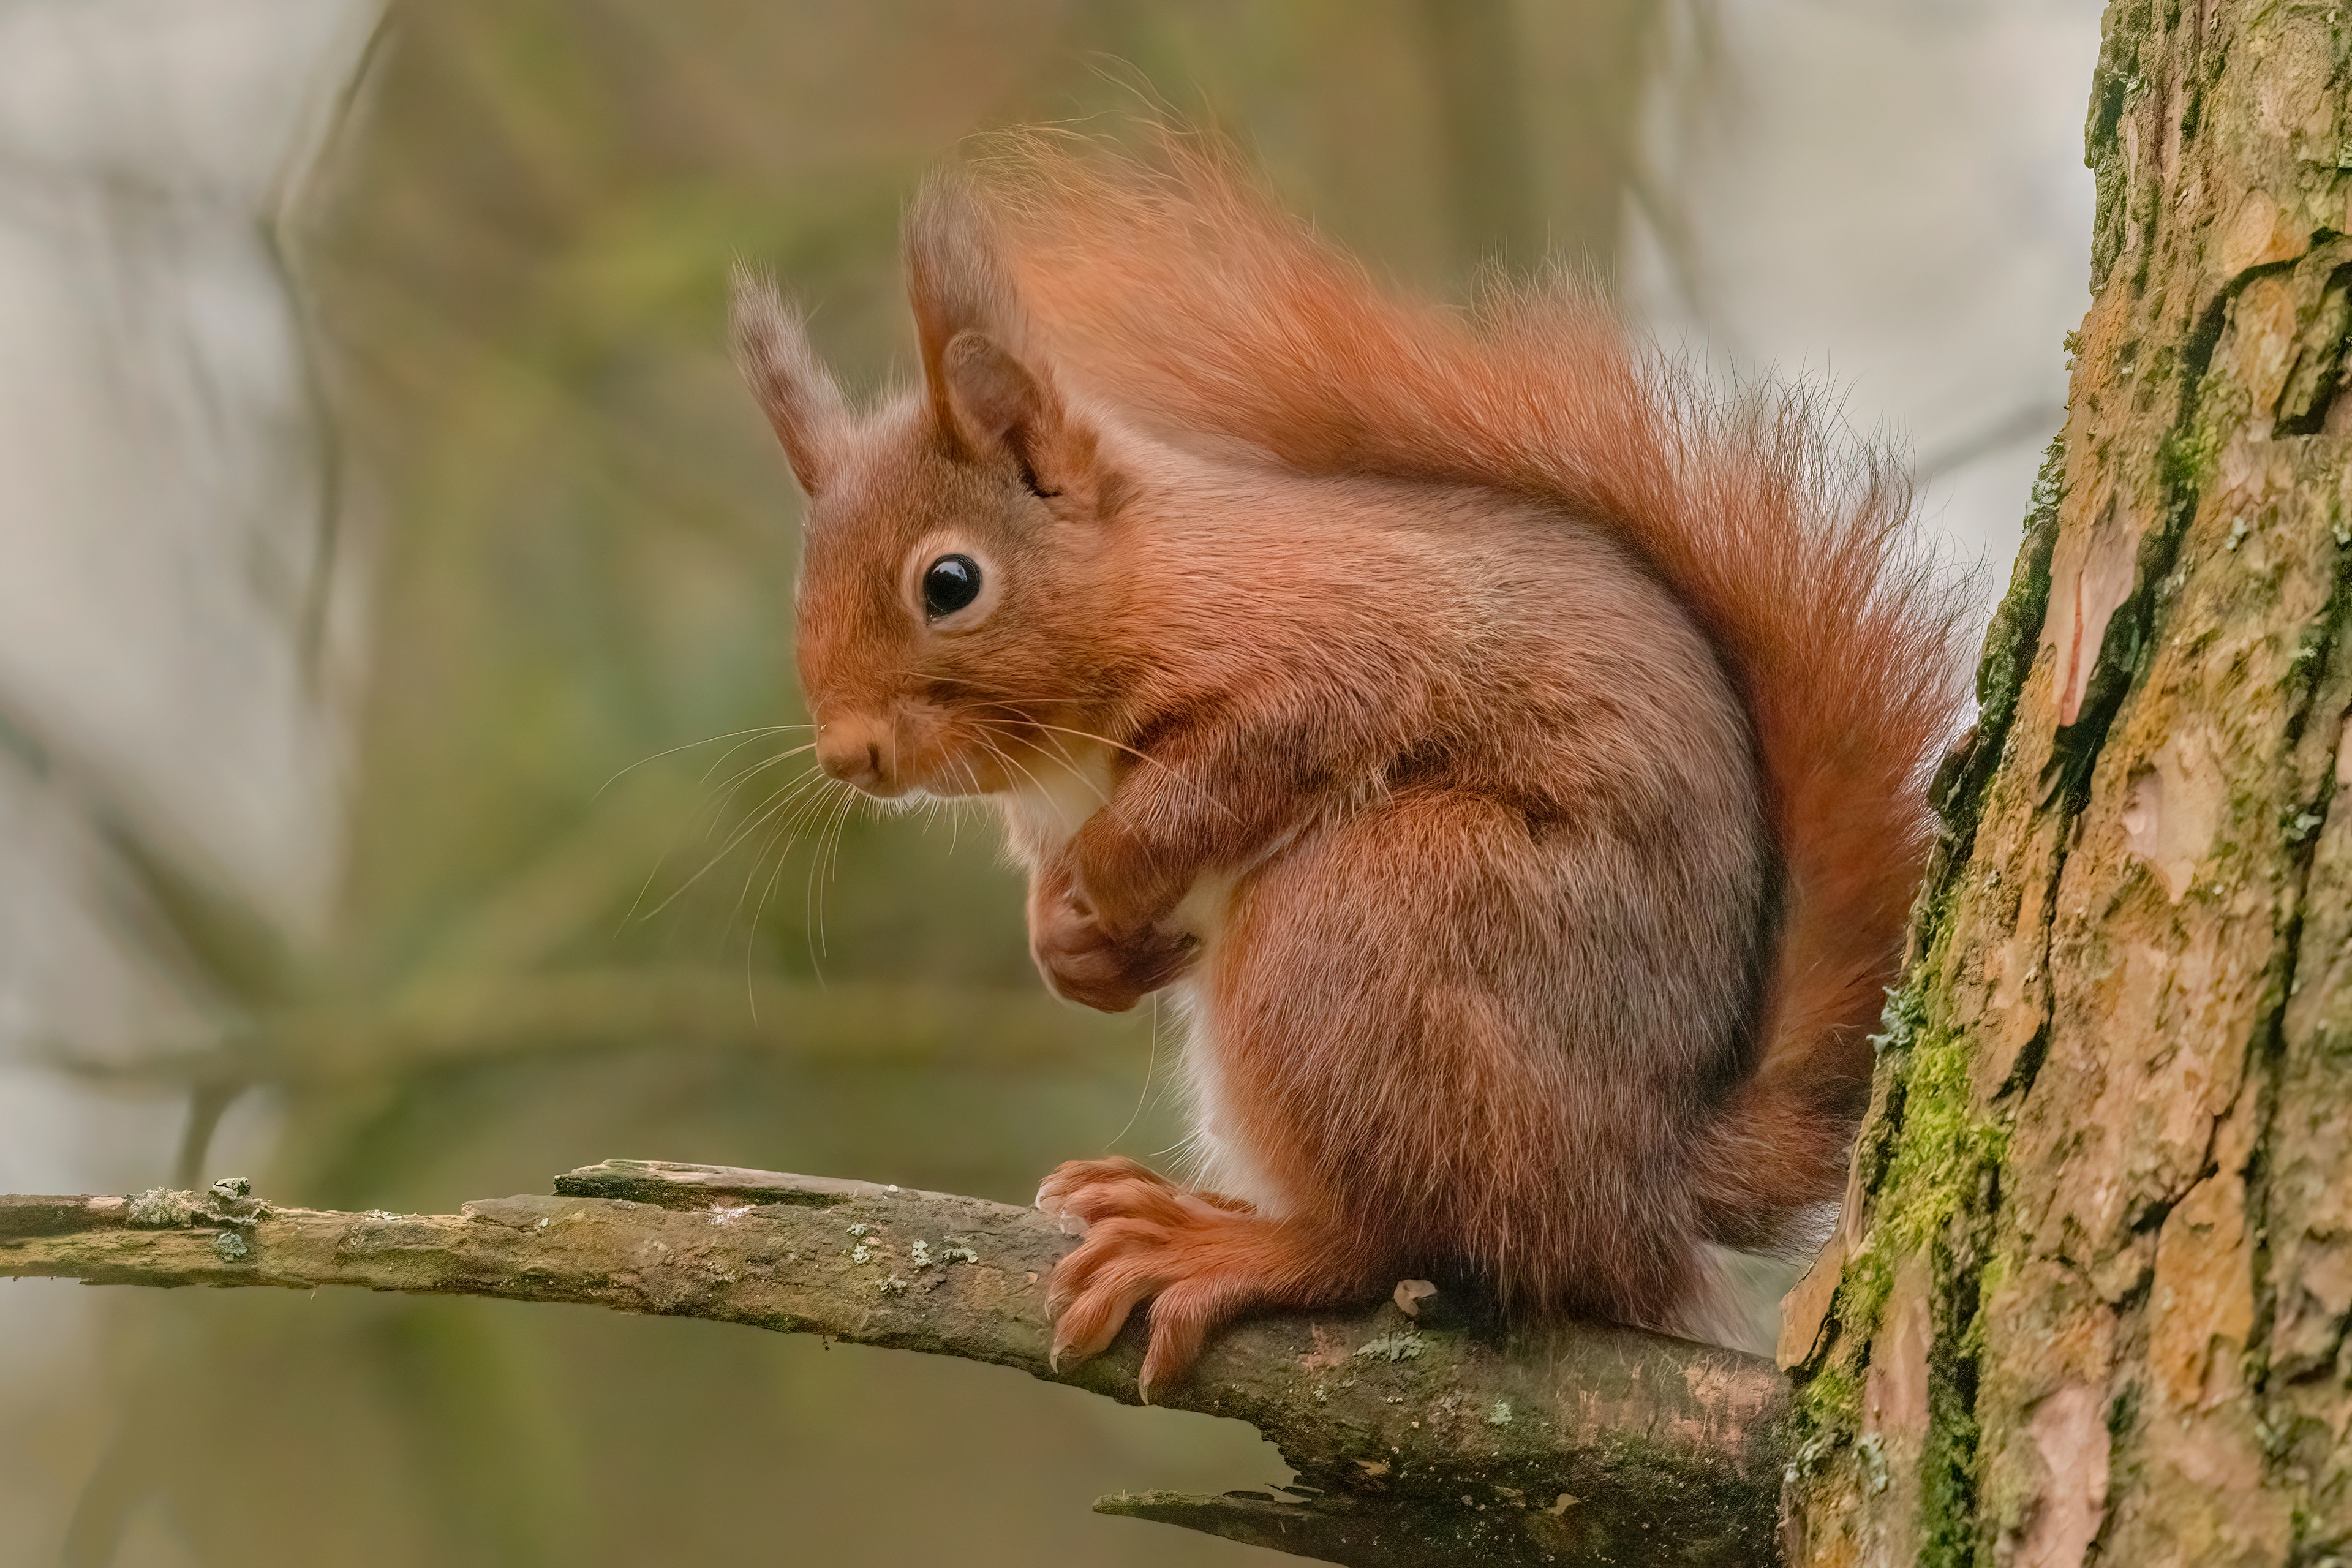 A squirrel sitting on a branch